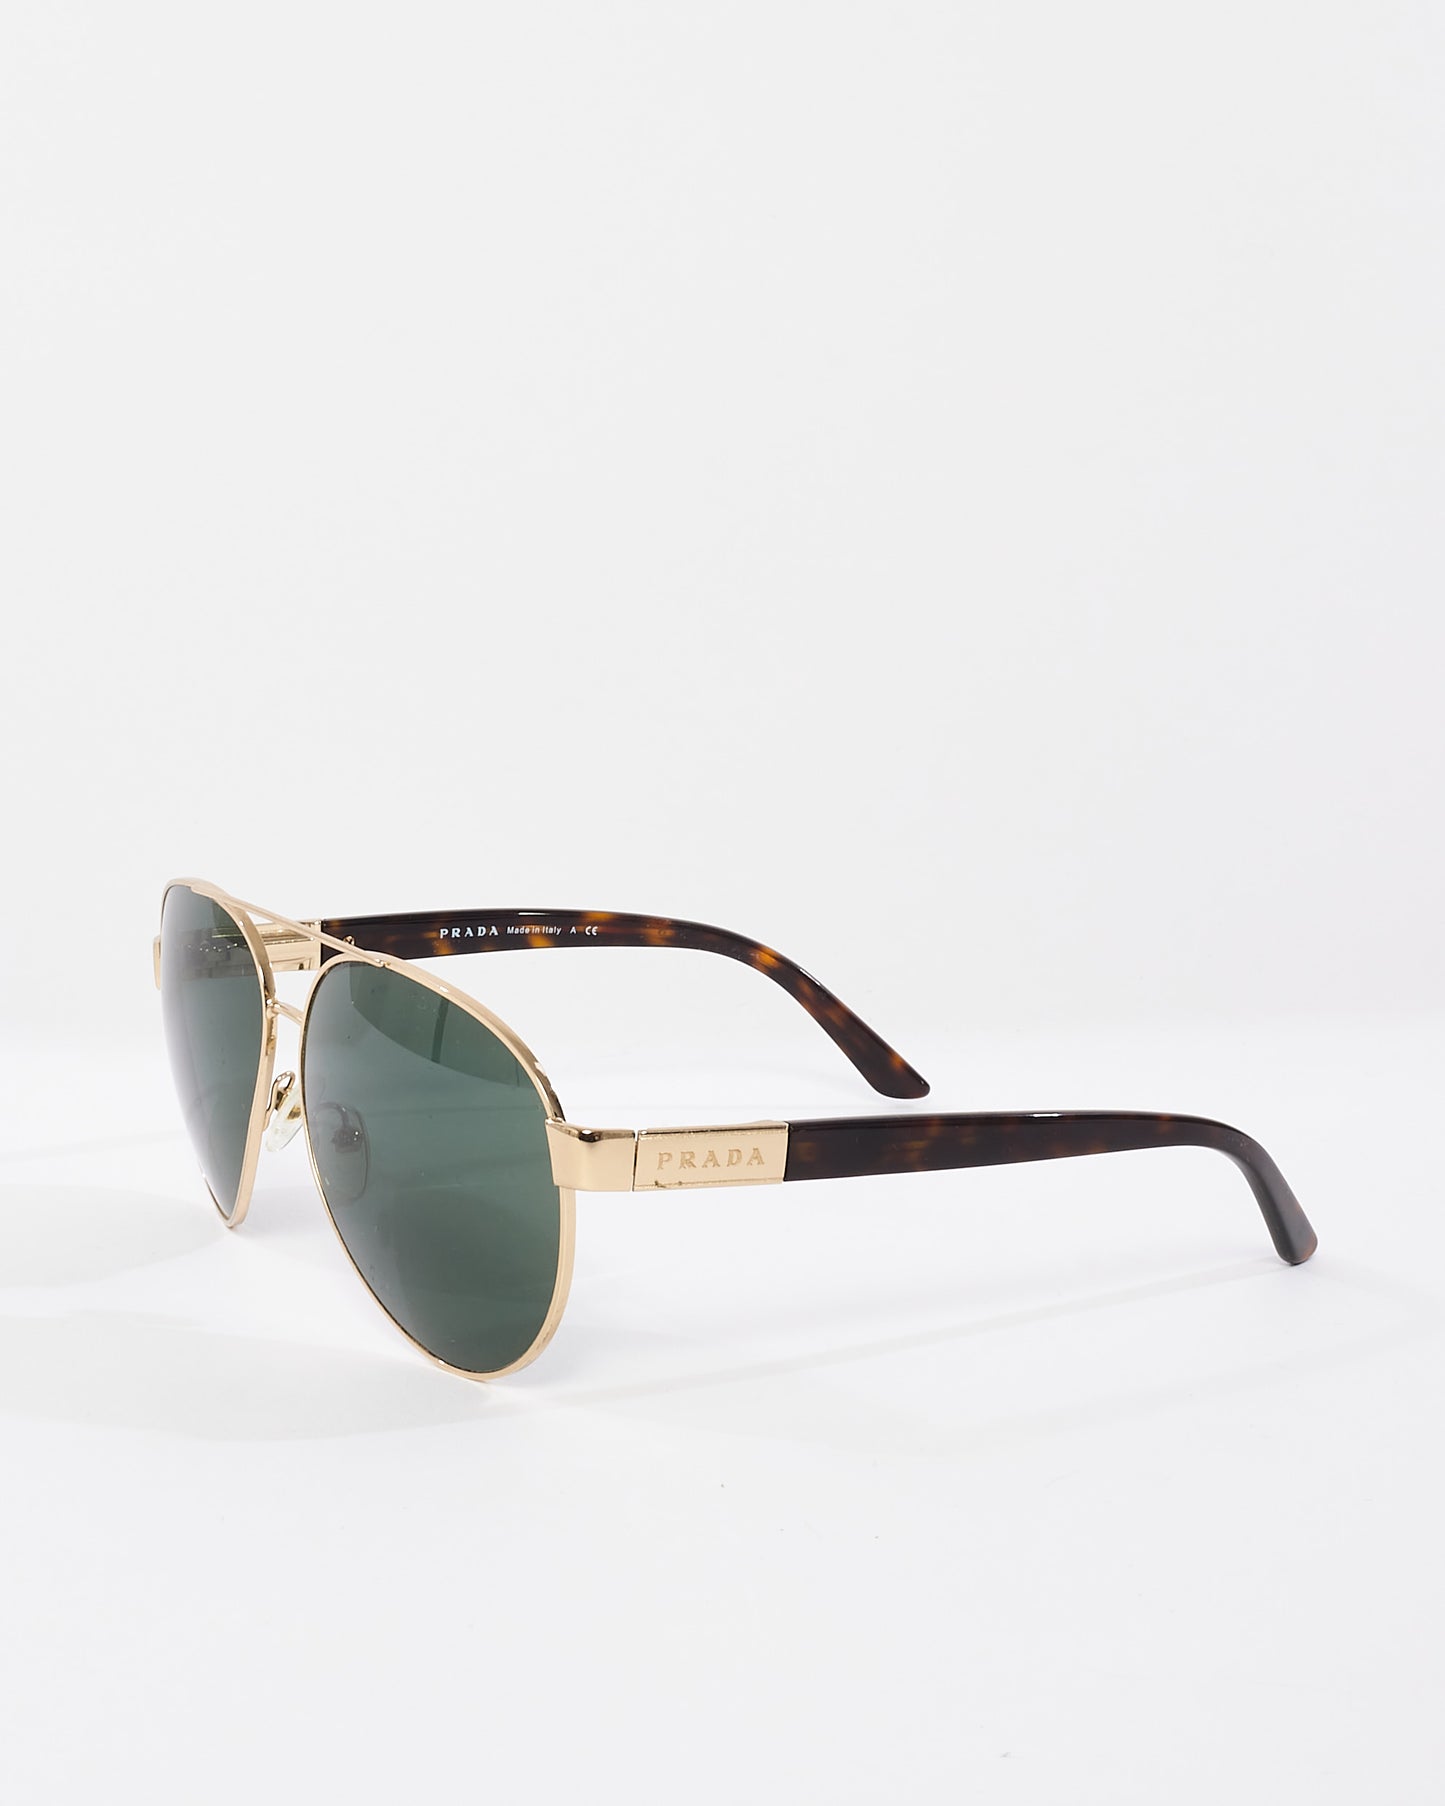 Prada Gold & Tortoise Aviator Sunglasses SPR 59N